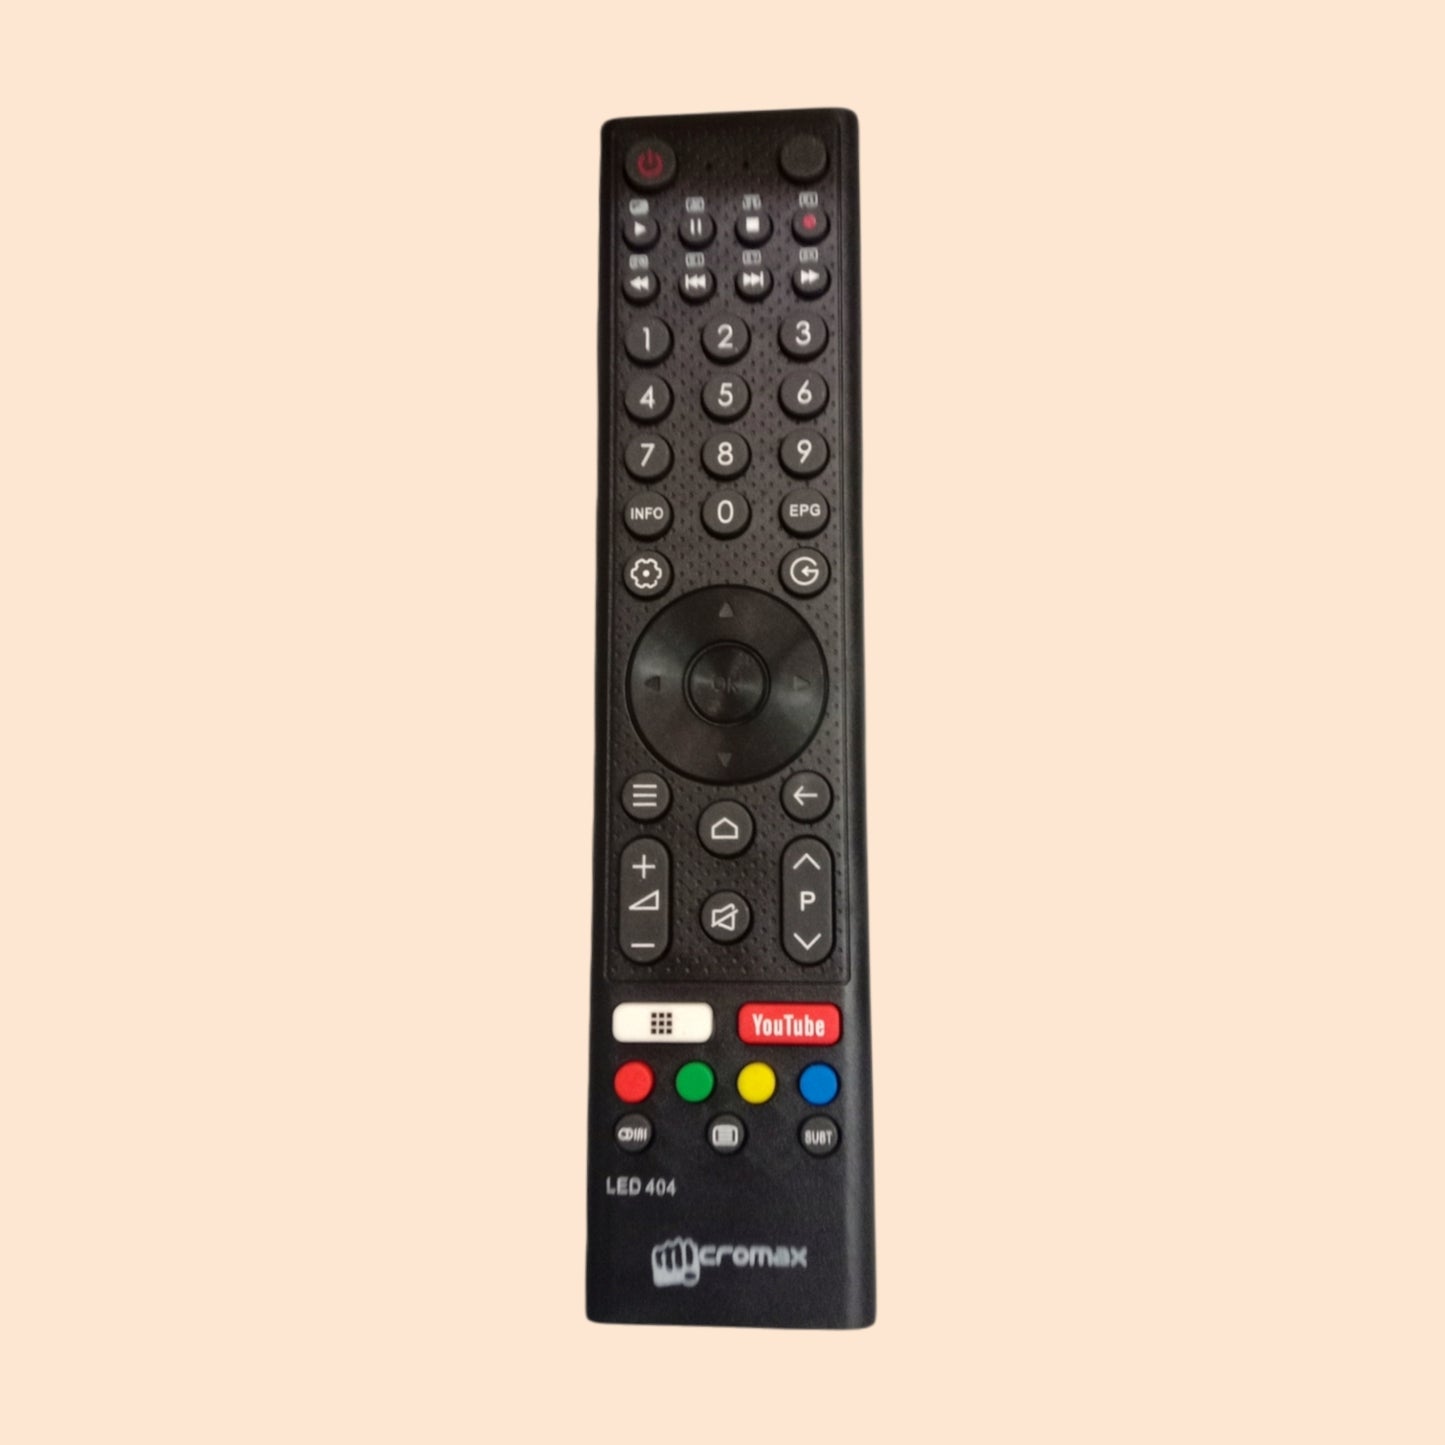 Micromax smart tv remote with youtube - Faritha